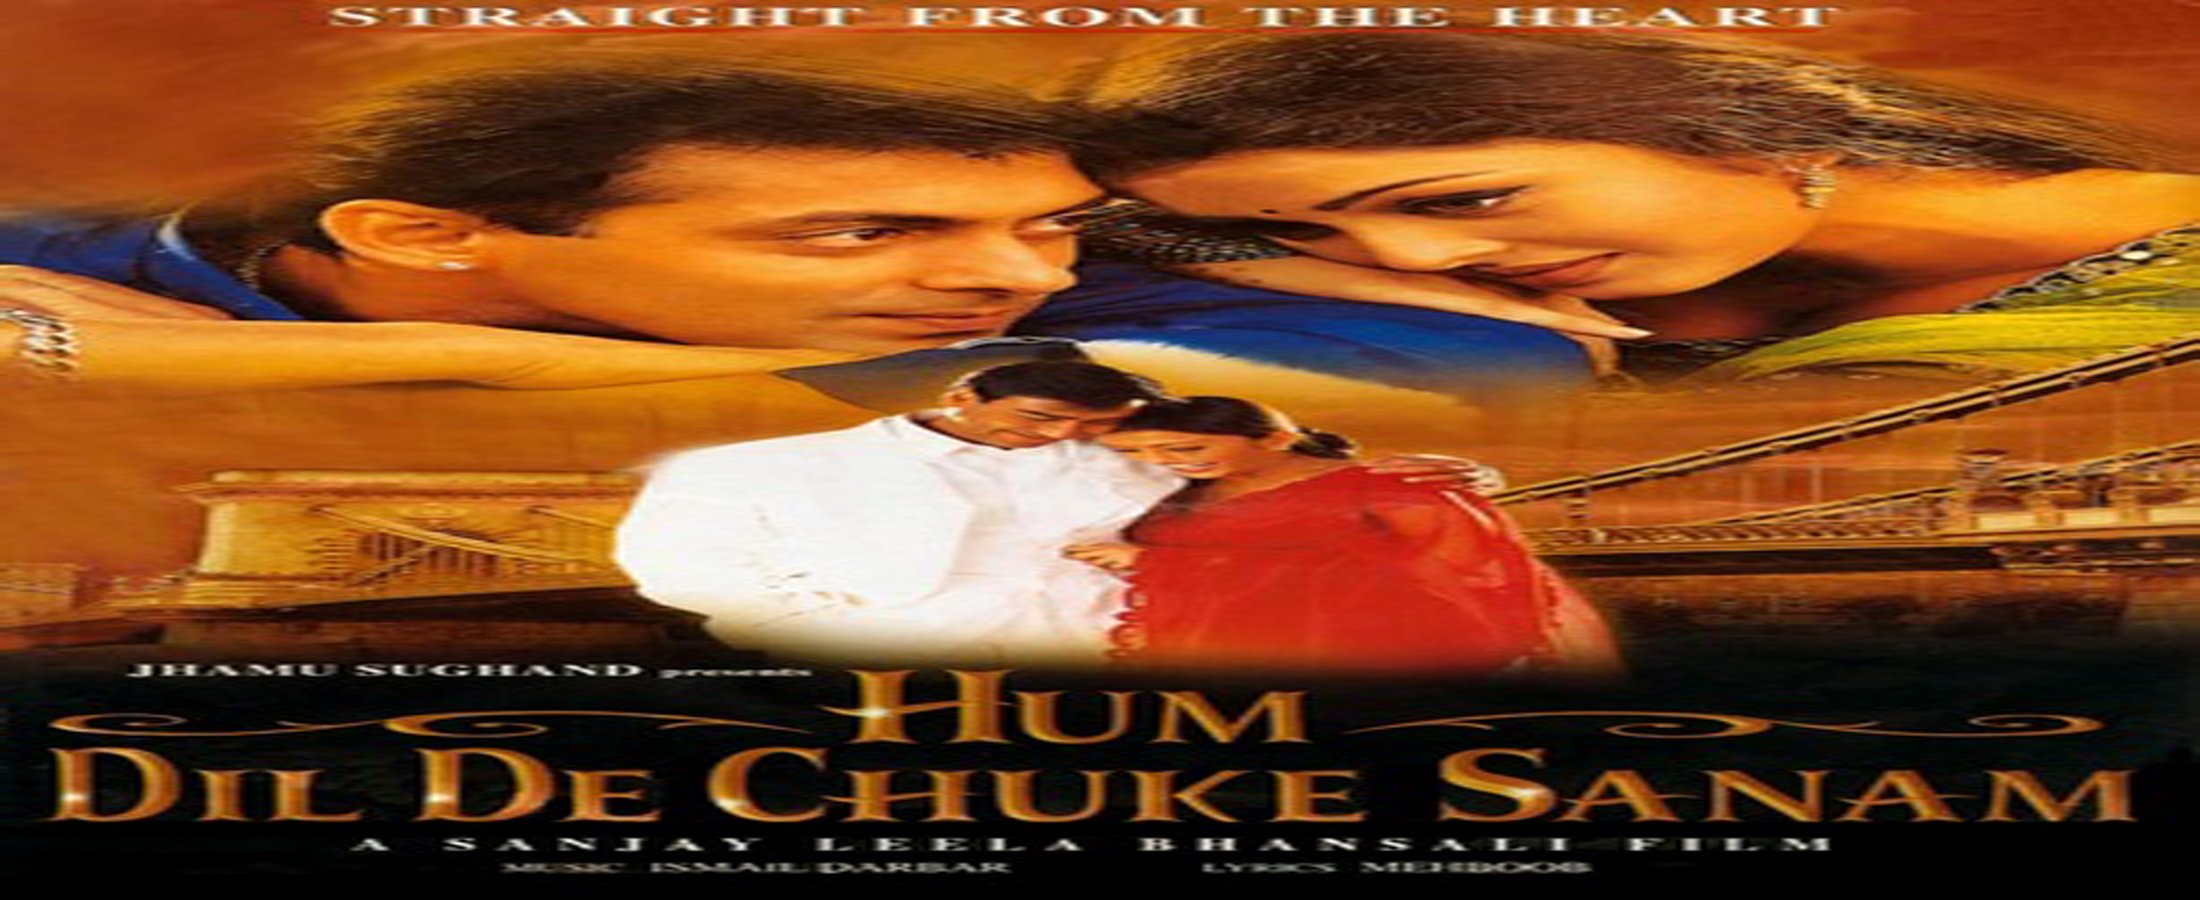 Hum Dil De Chuke Sanam movie  full hd 1080p